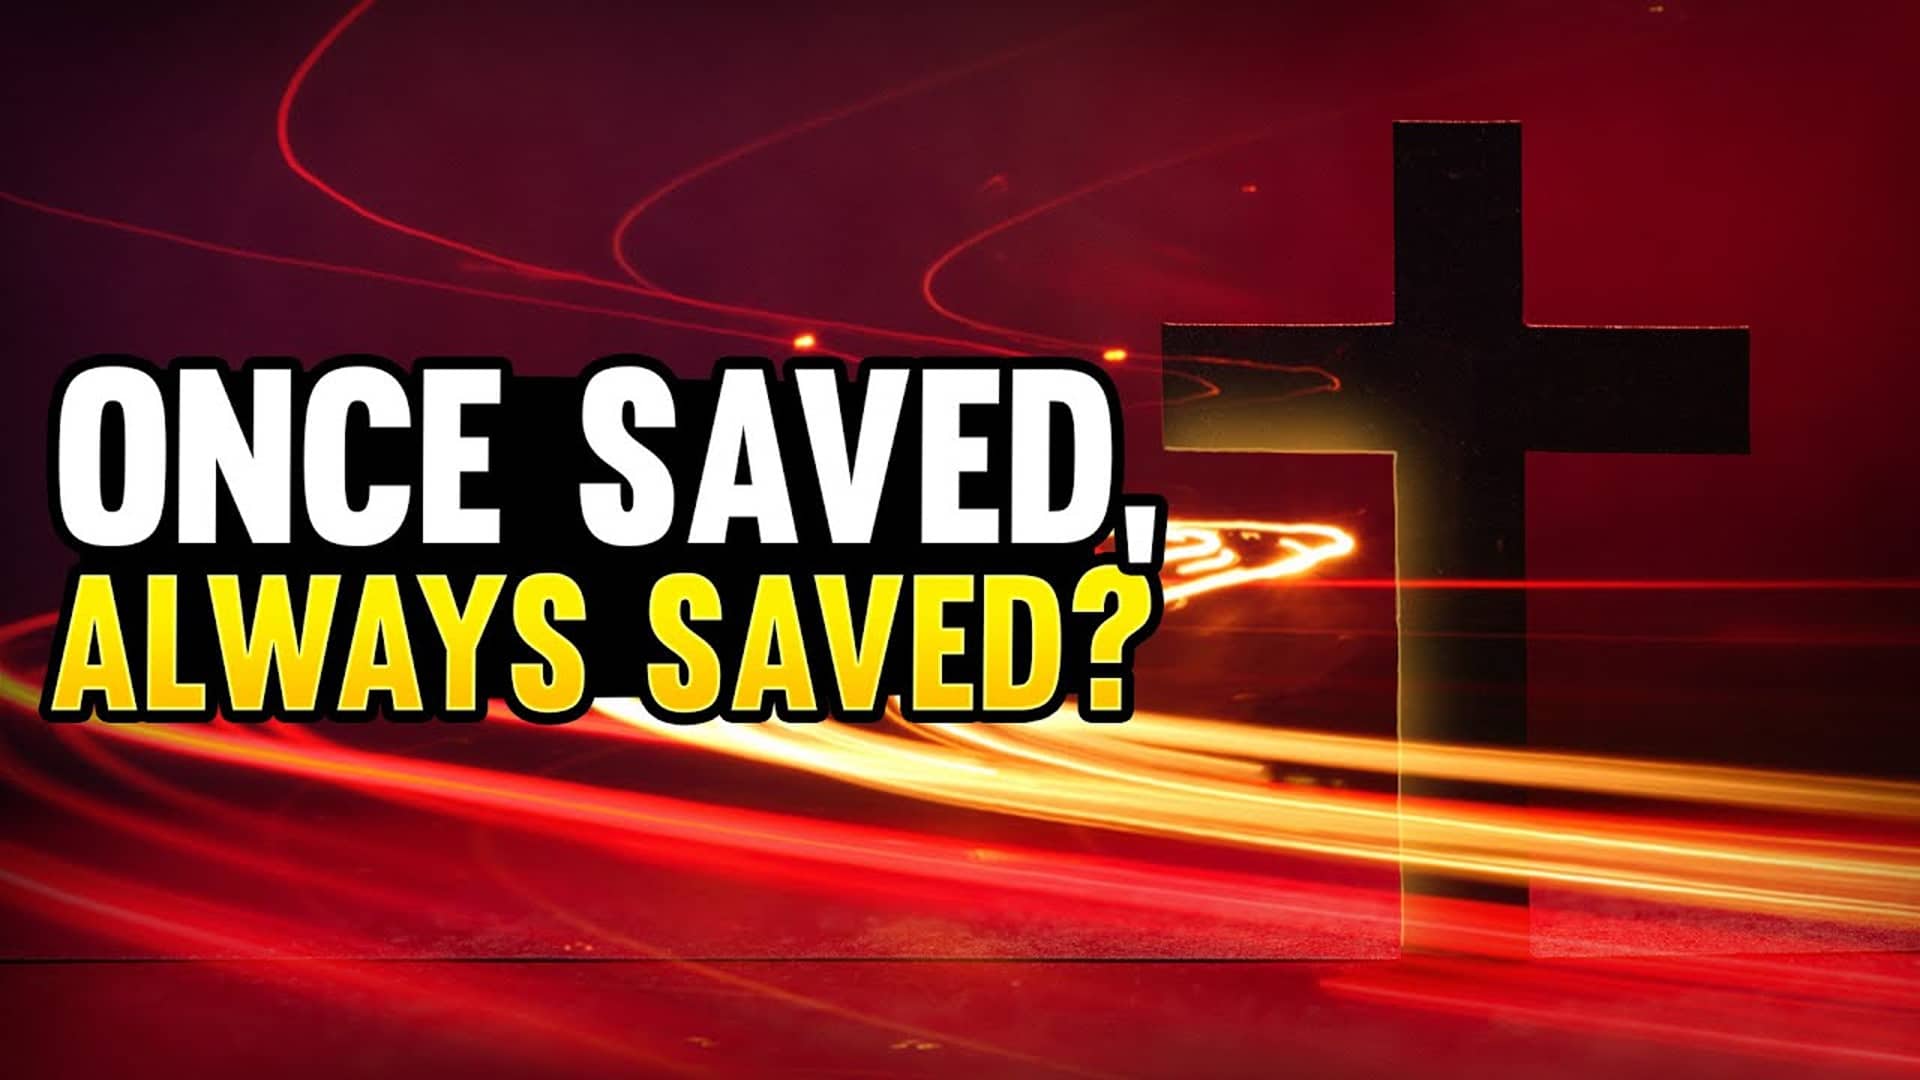 Once saved, always saved?